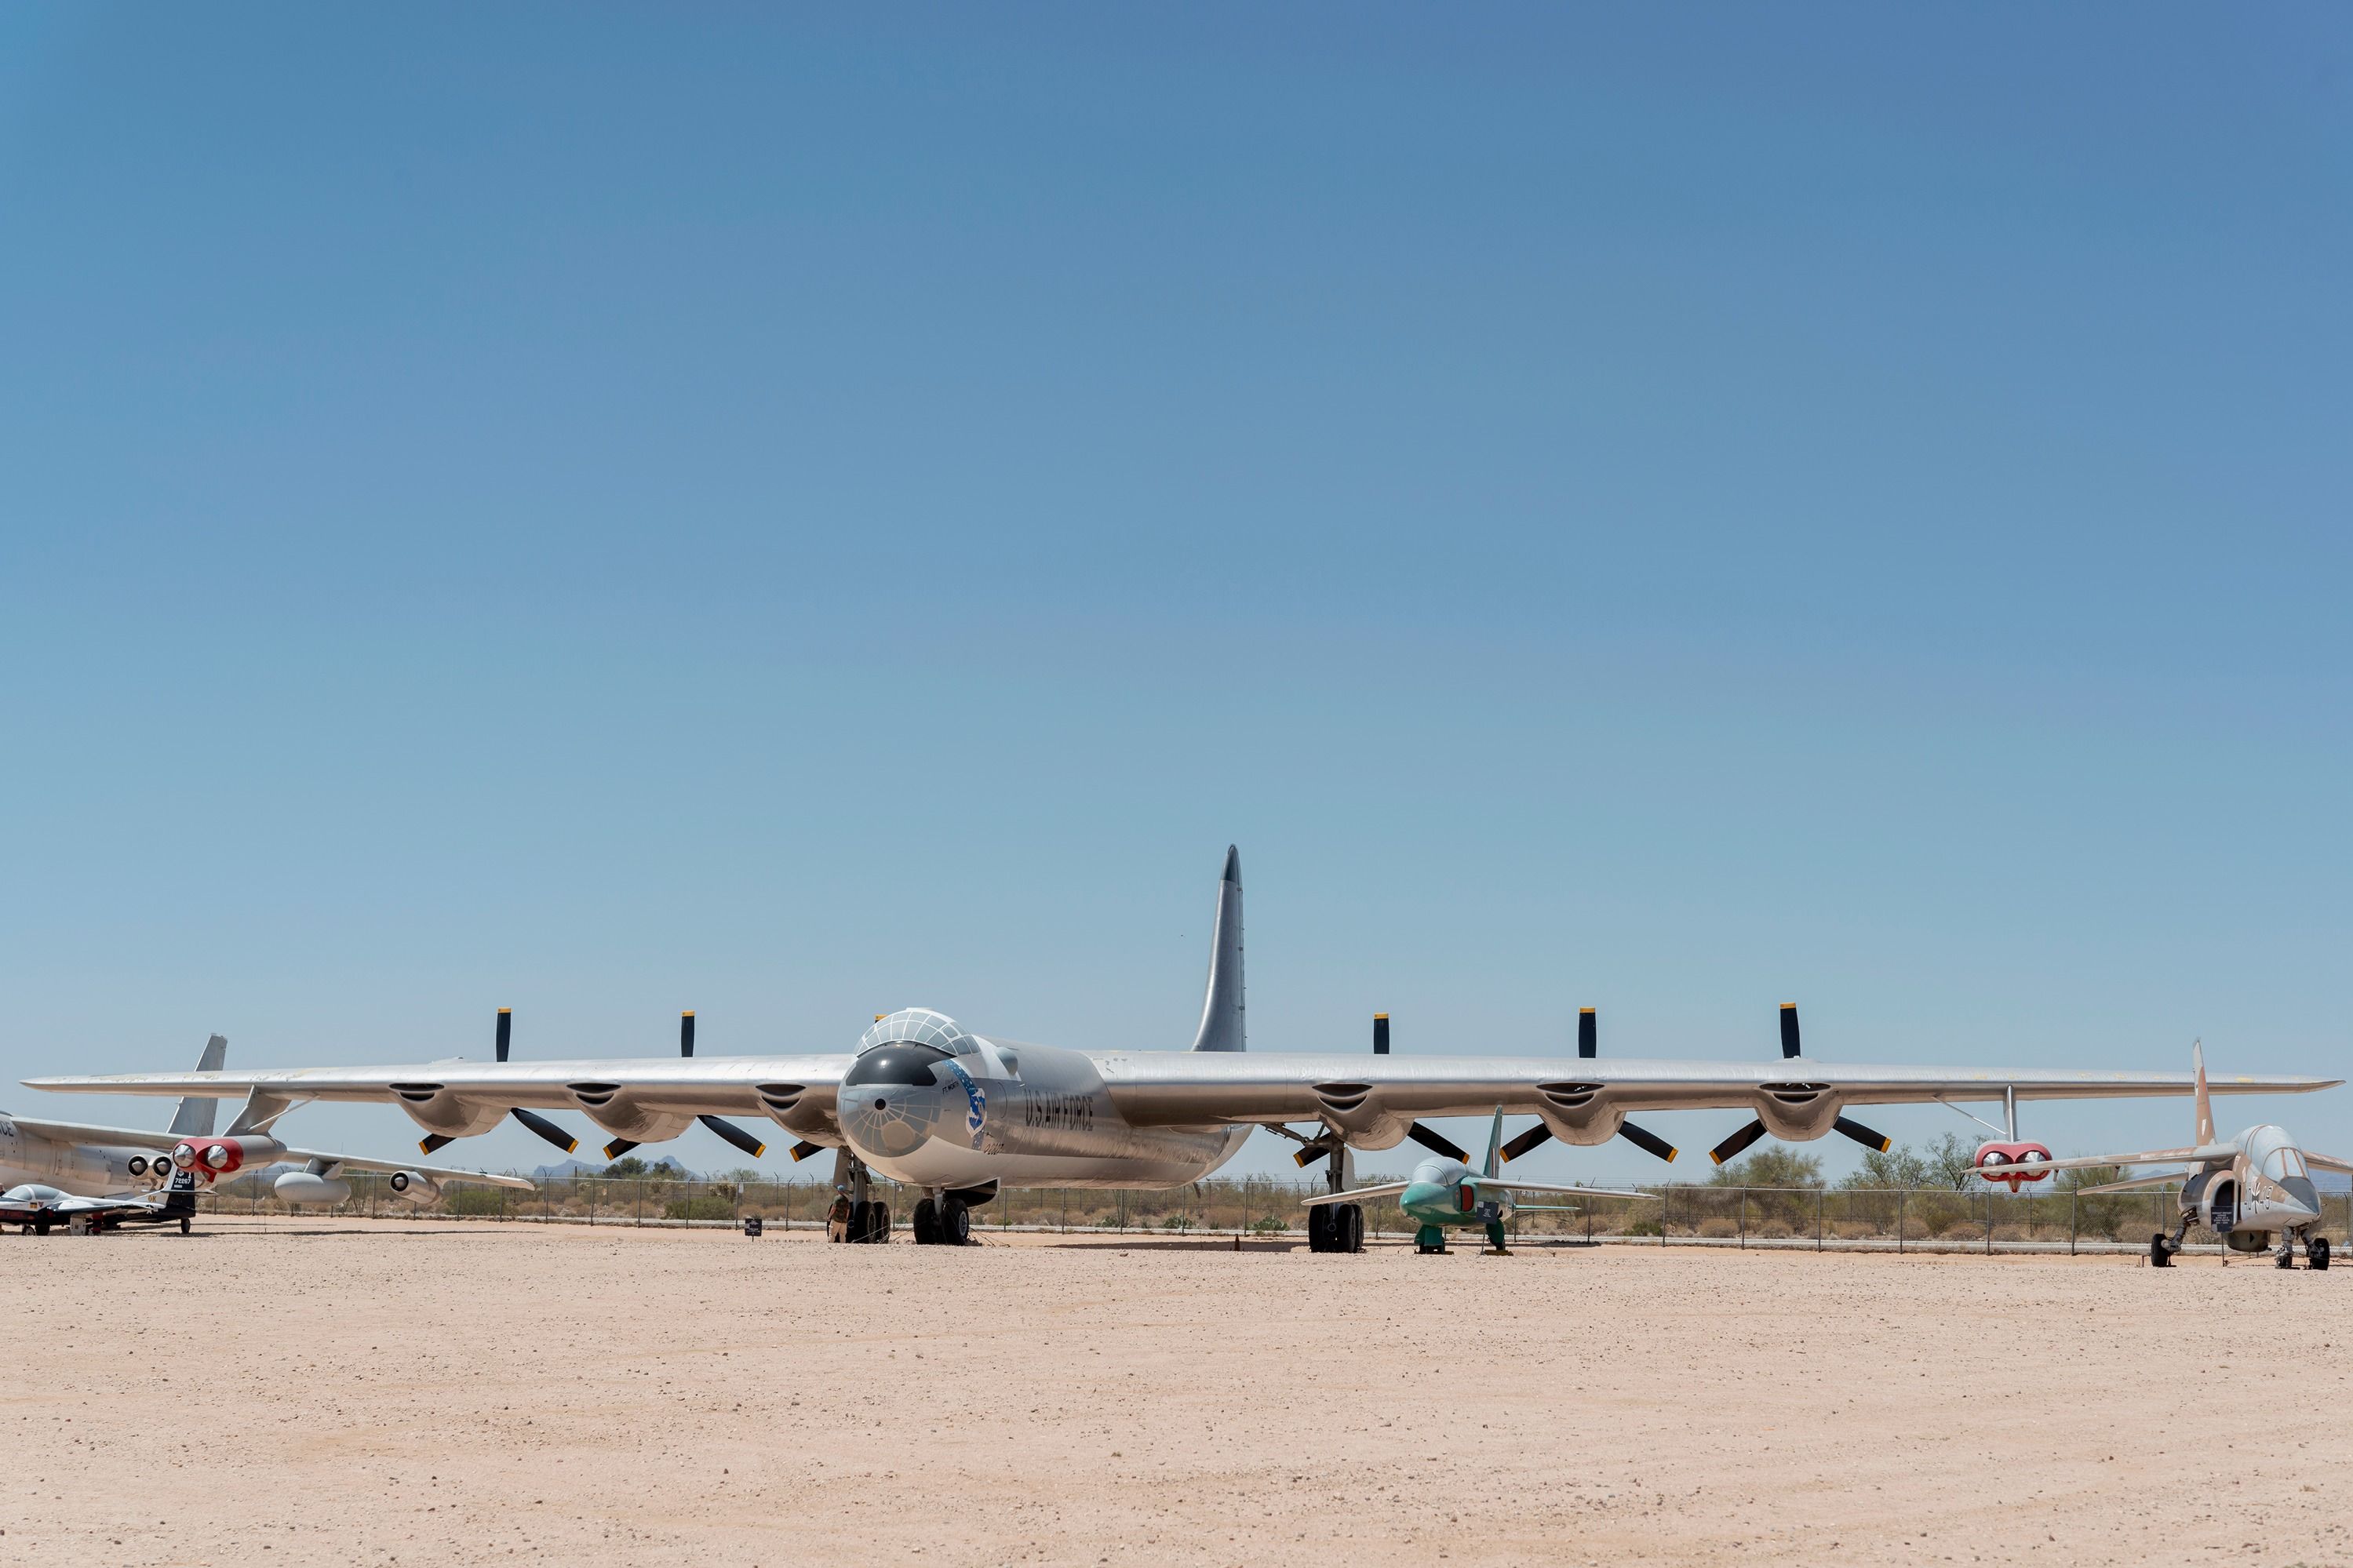 Convair B-36 Peacemaker in the desert